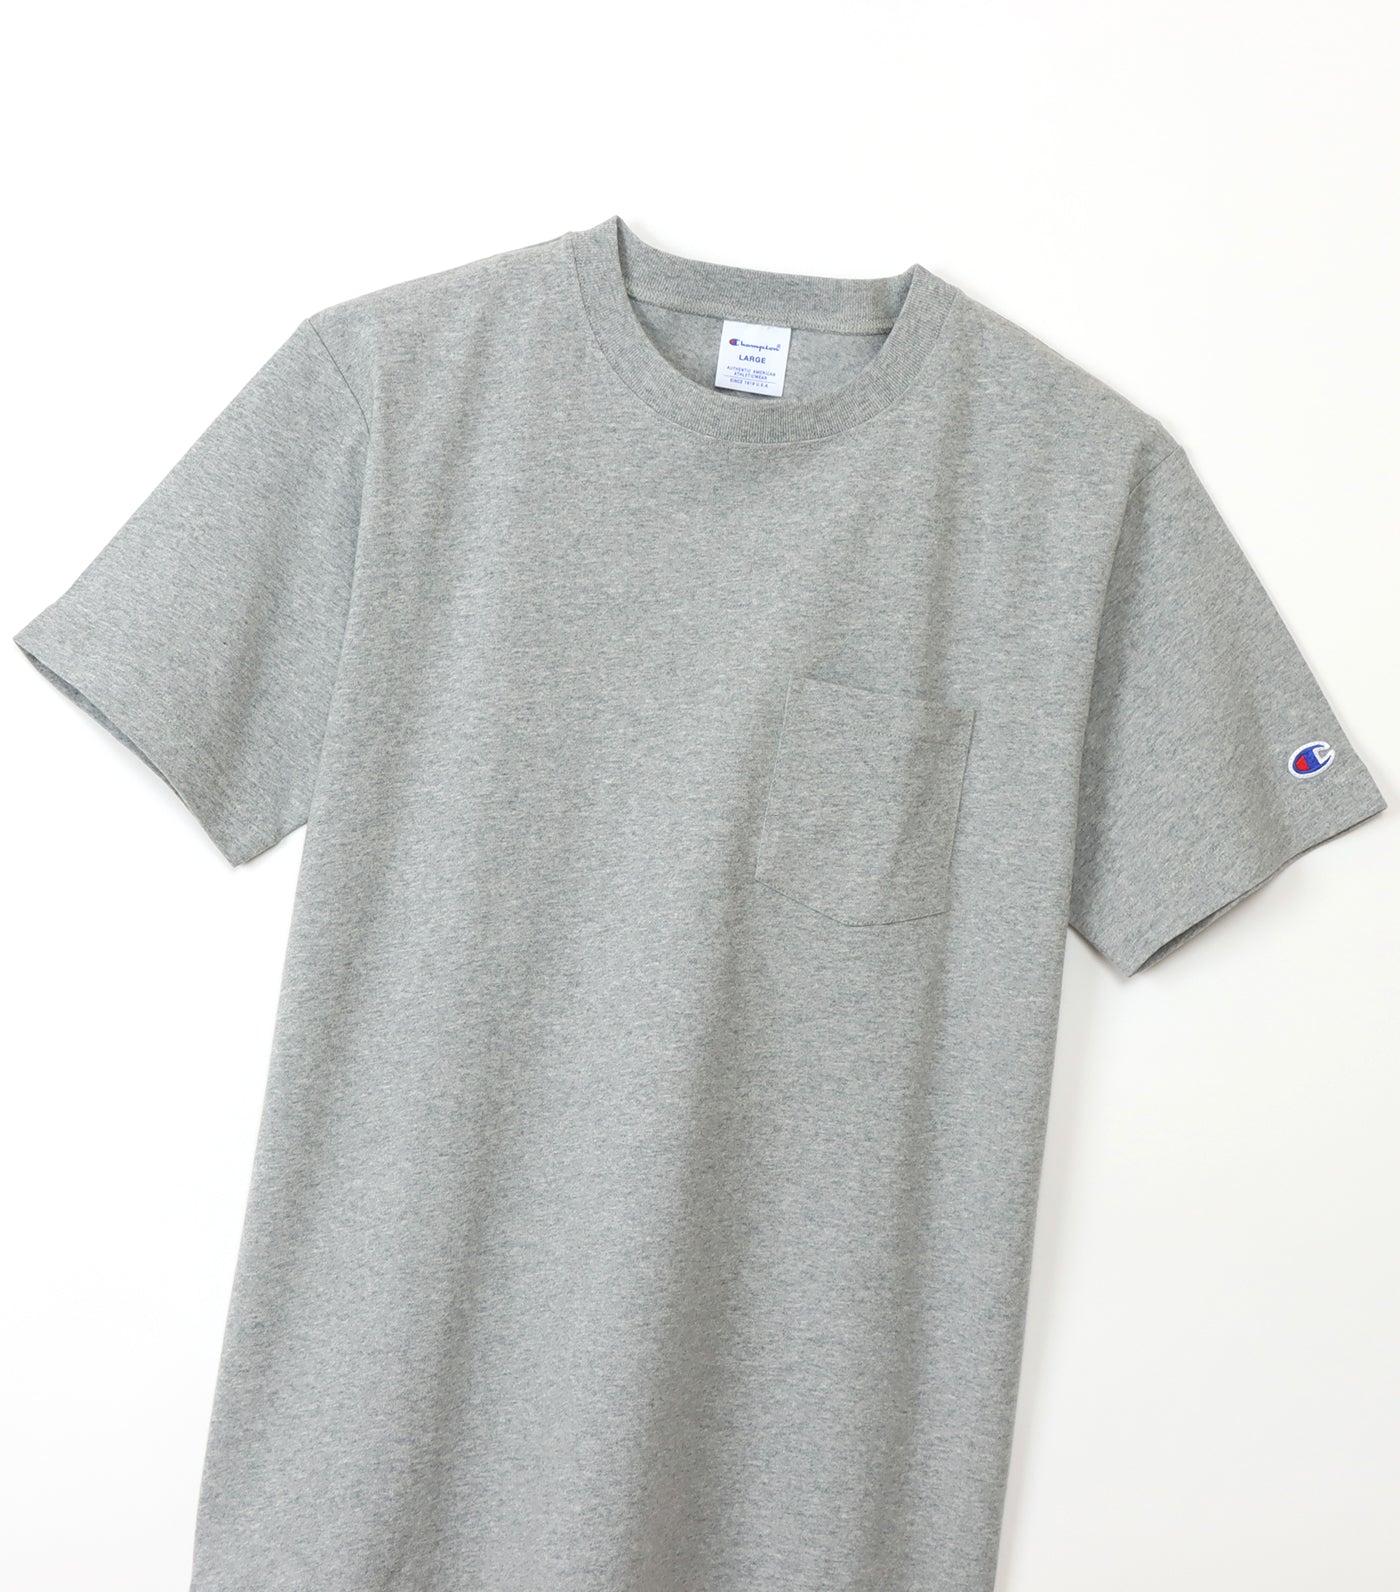 Japan Line Short Sleeve Pocket T-Shirt Oxford Gray